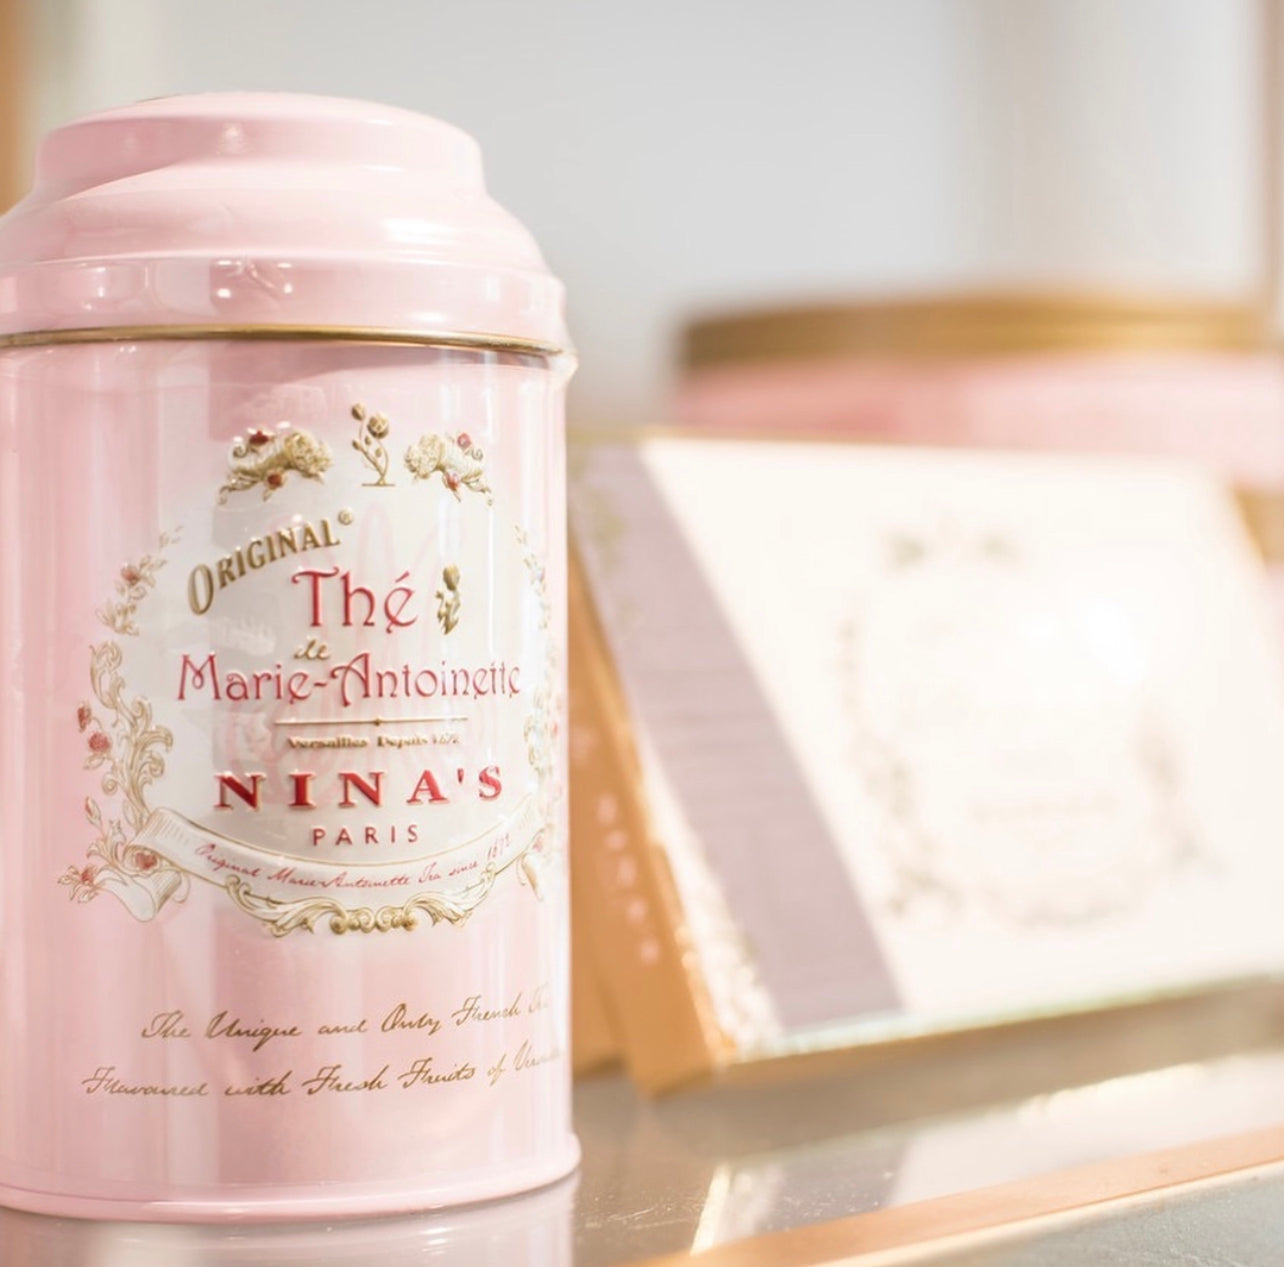 Nina’s Paris Marie Antoinette Black Tea